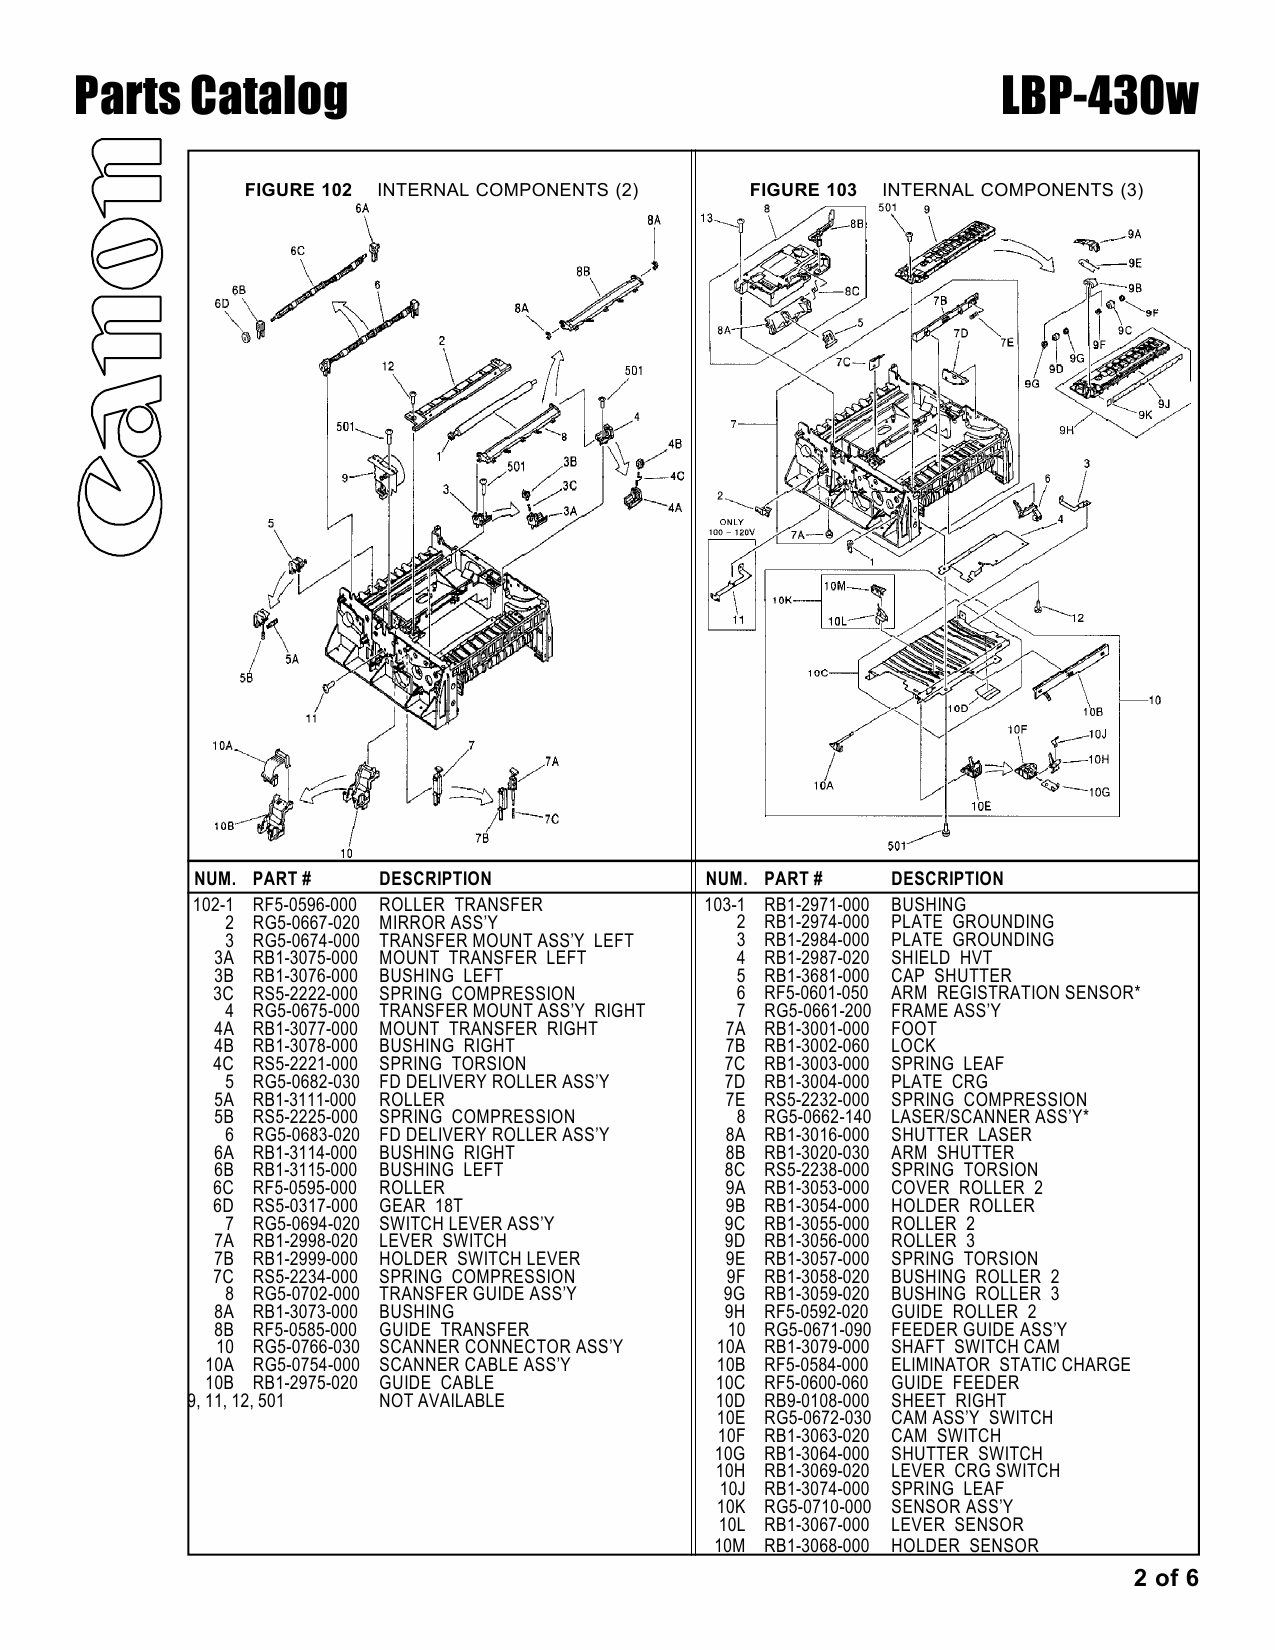 Canon imageCLASS LBP-430w Parts Catalog Manual-2